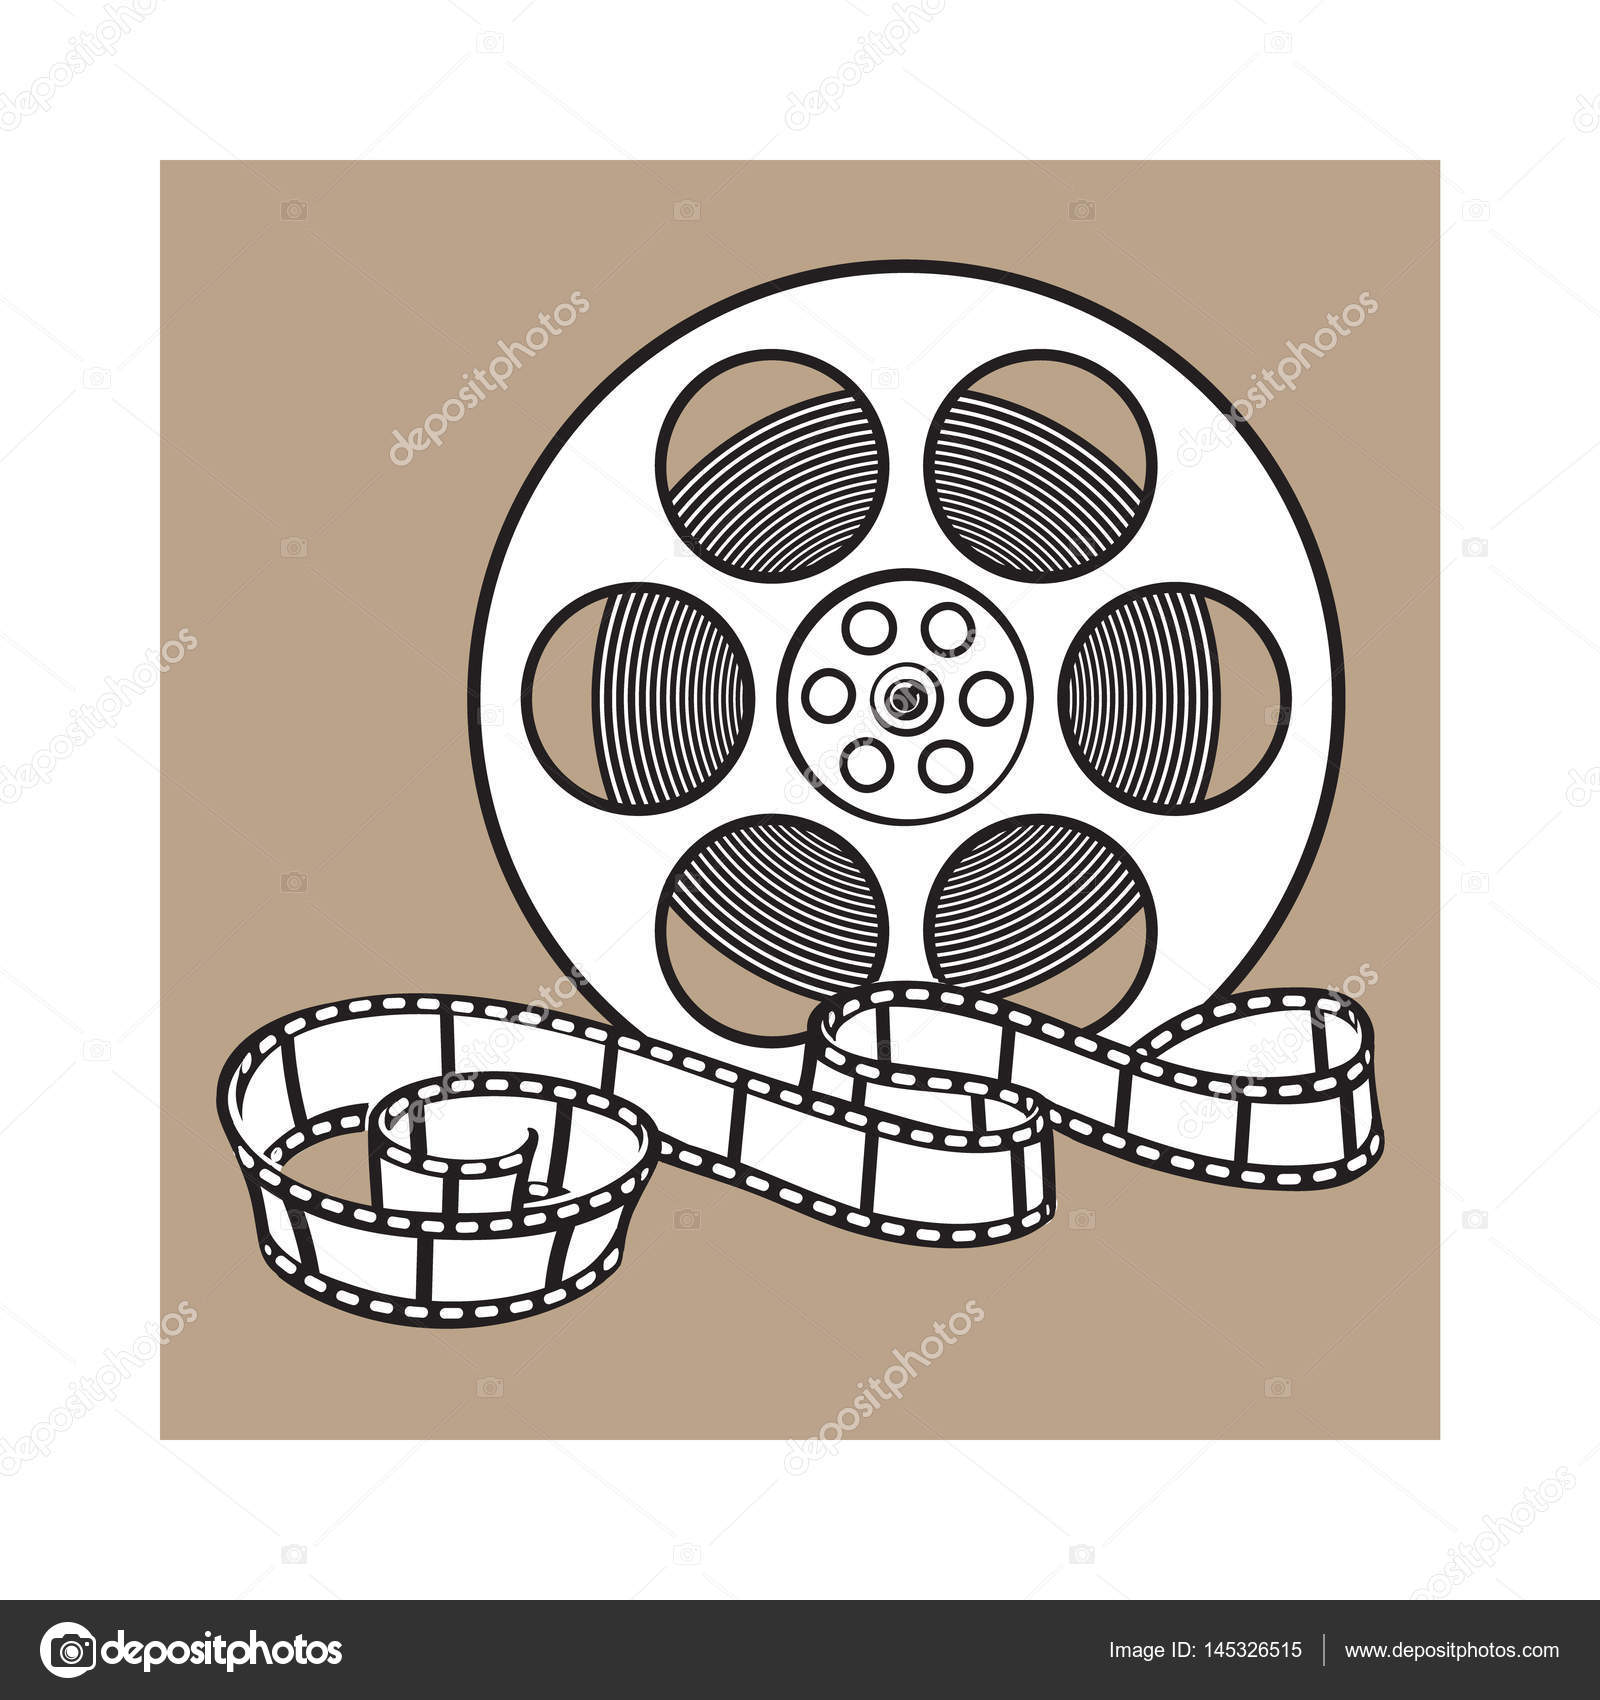 Film Reel Drawing at GetDrawings Free download